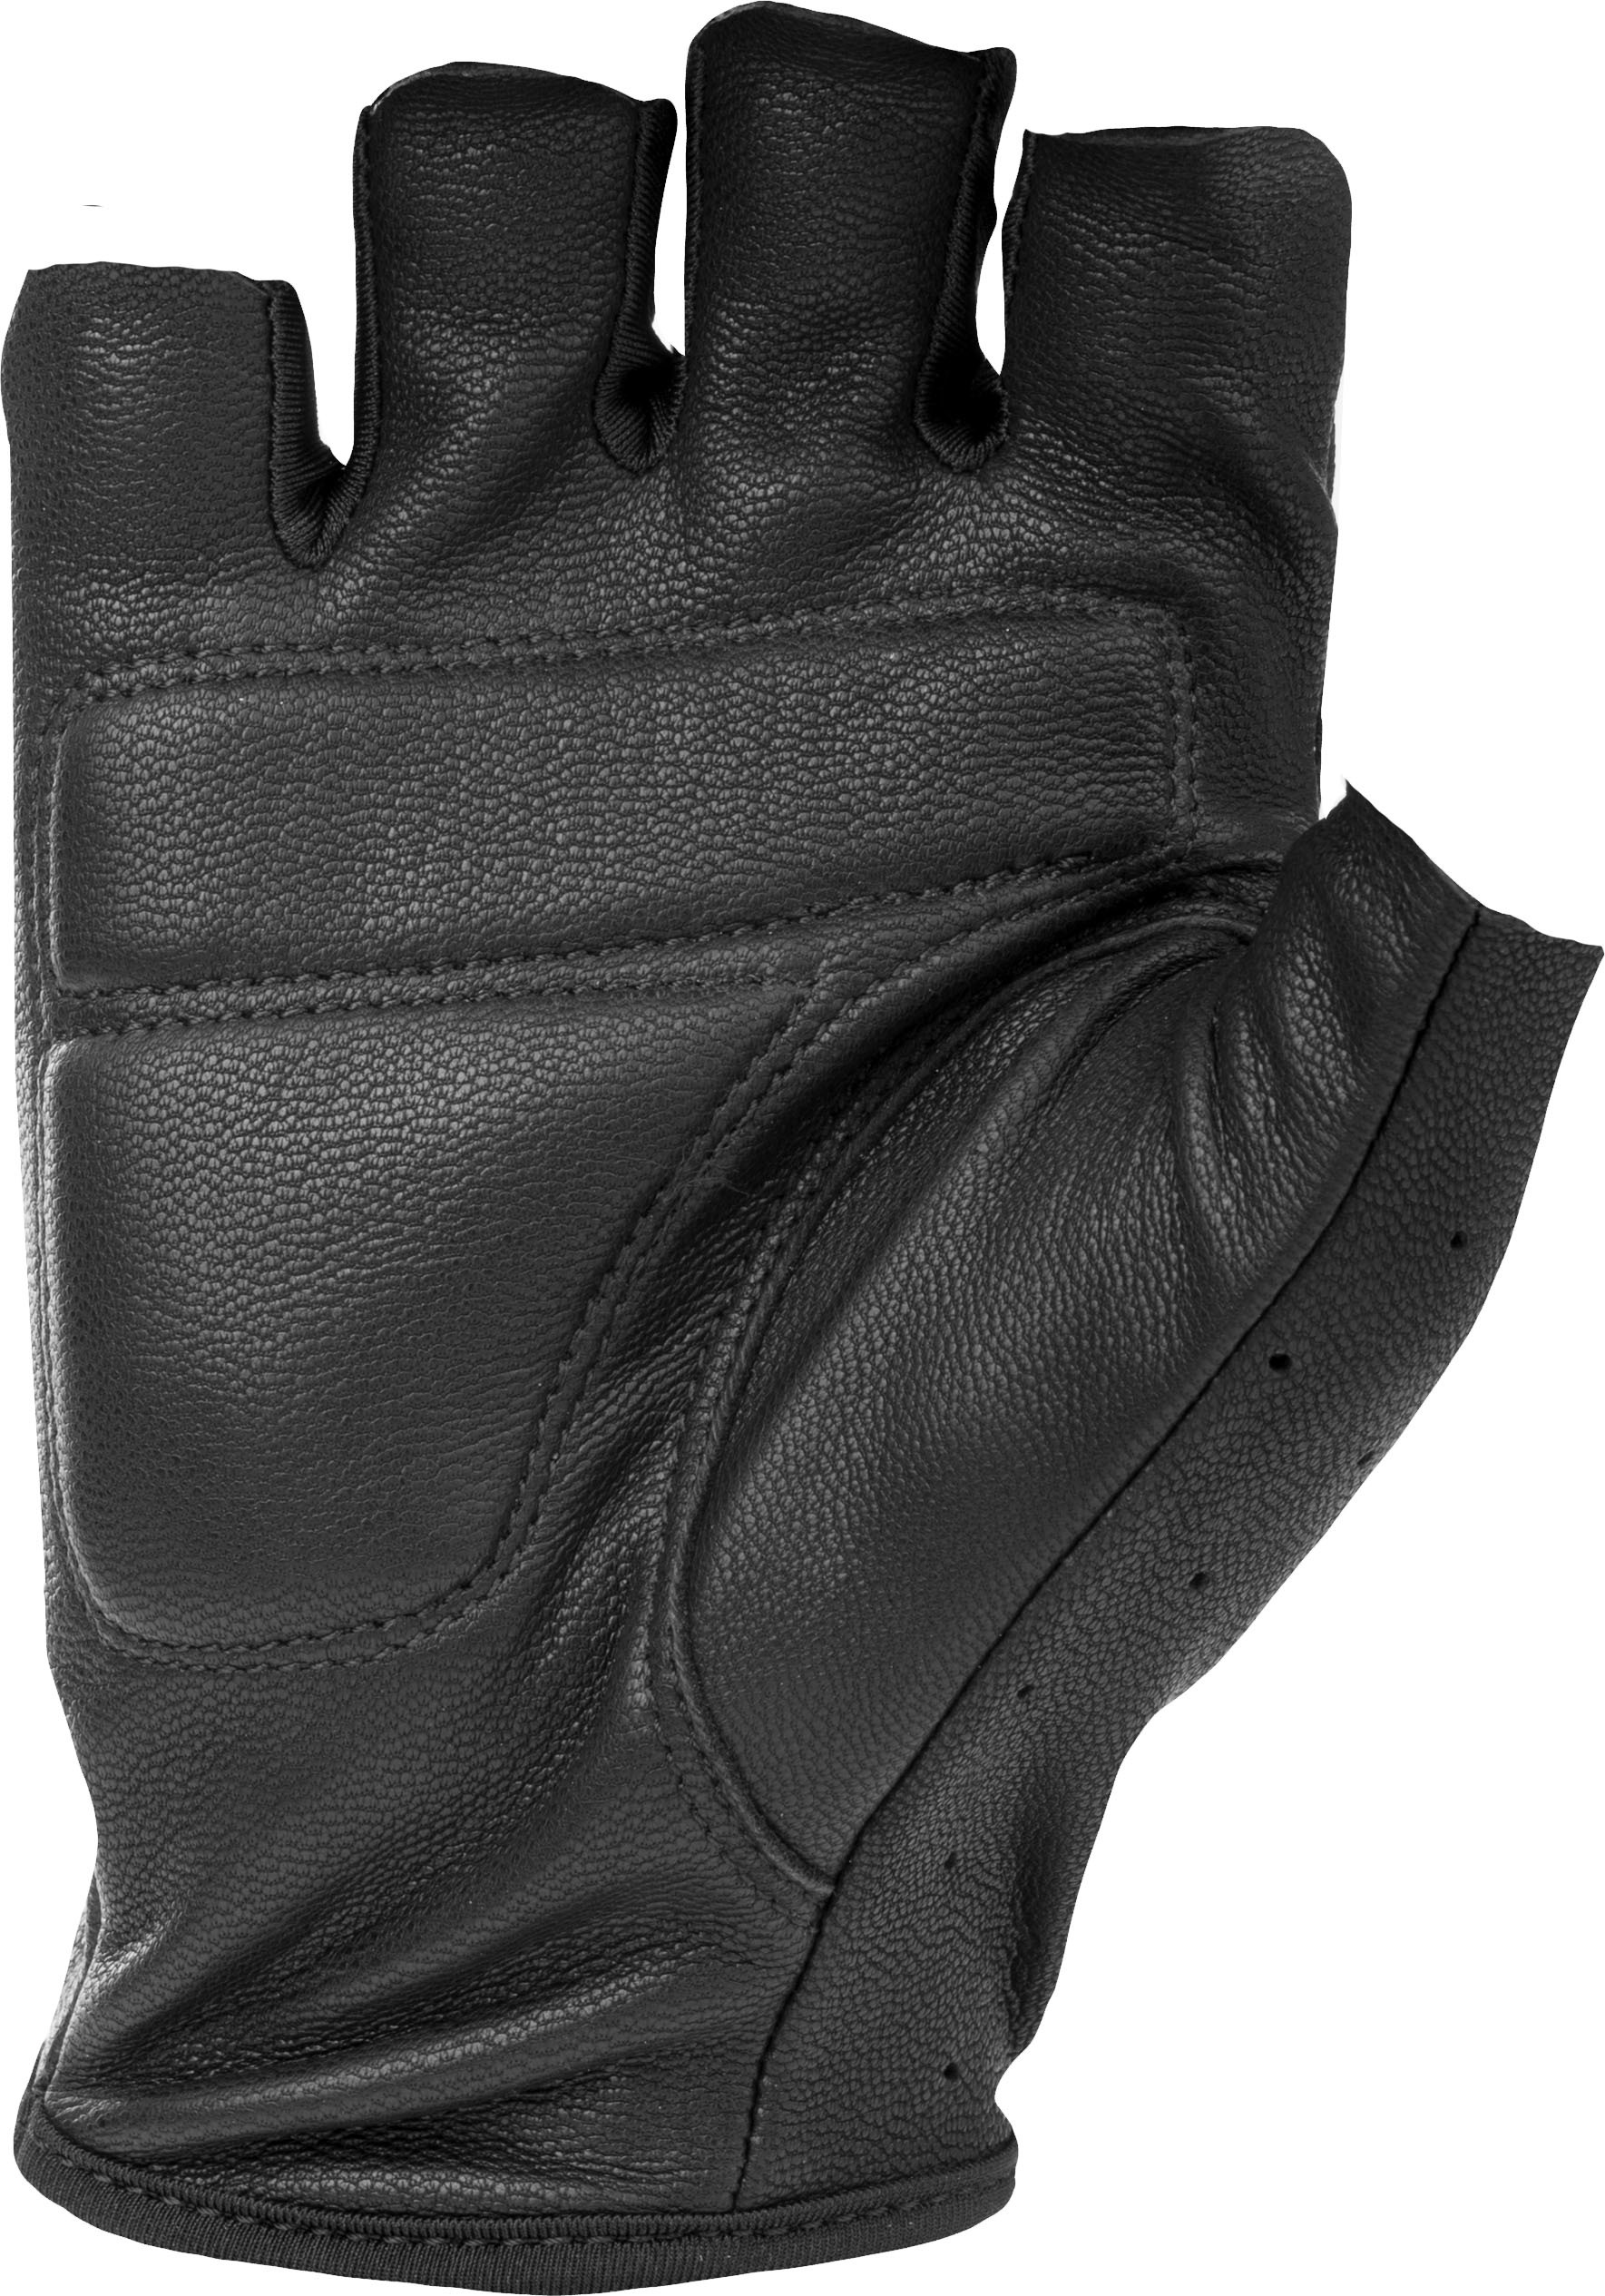 Ranger Riding Gloves Black Large - Click Image to Close